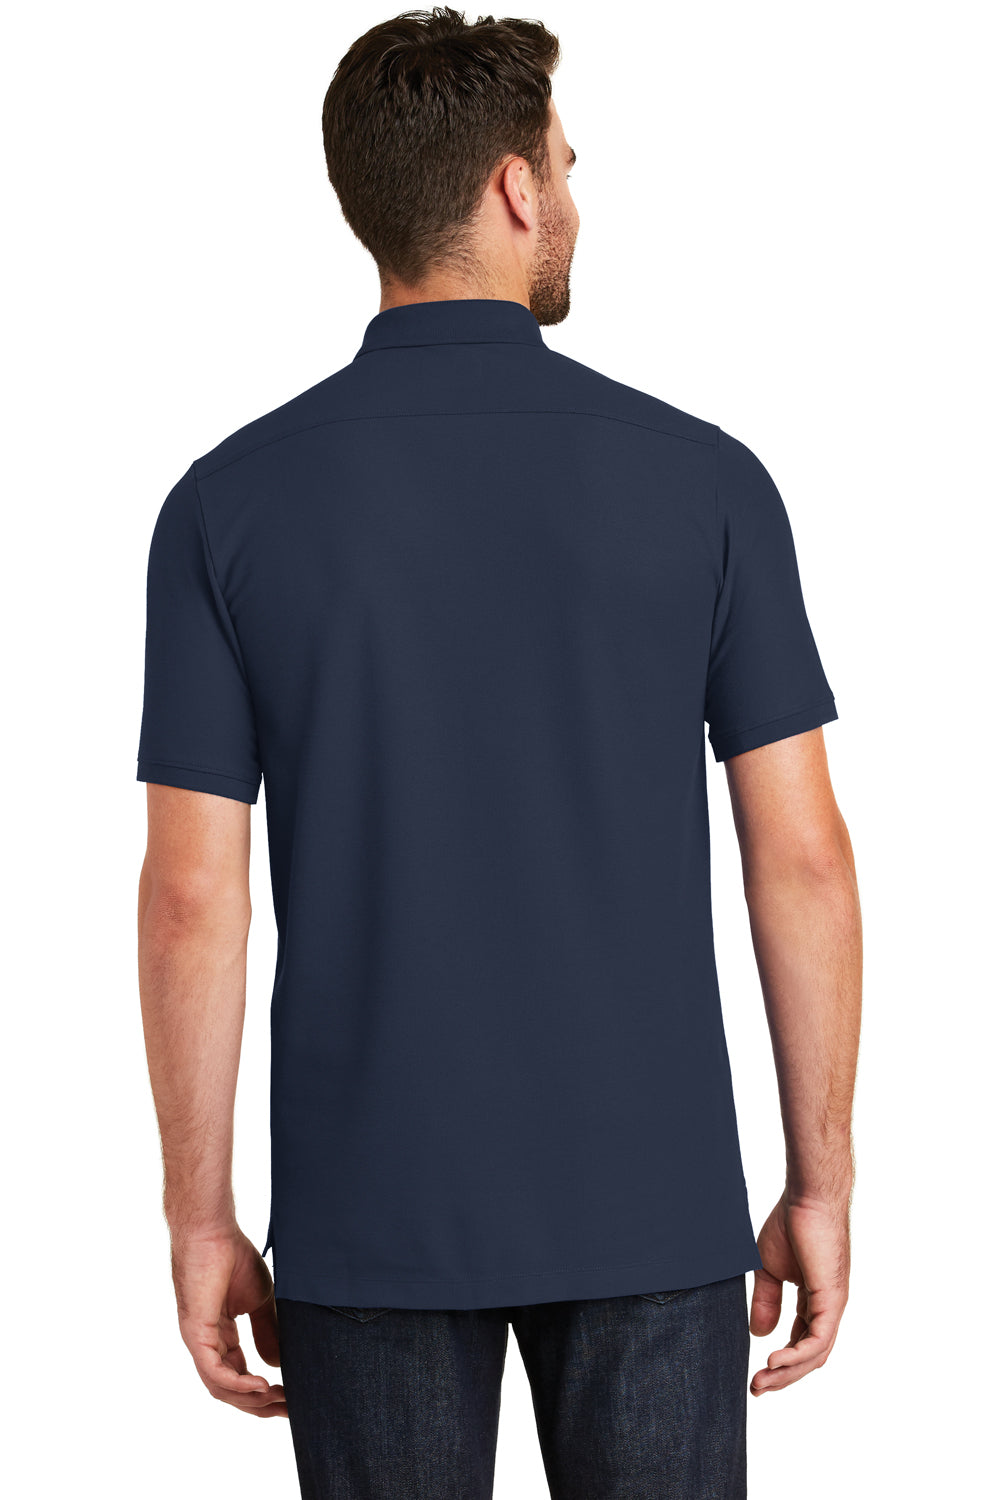 New Era NEA300 Mens Venue Home Plate Moisture Wicking Short Sleeve Polo Shirt Navy Blue Back